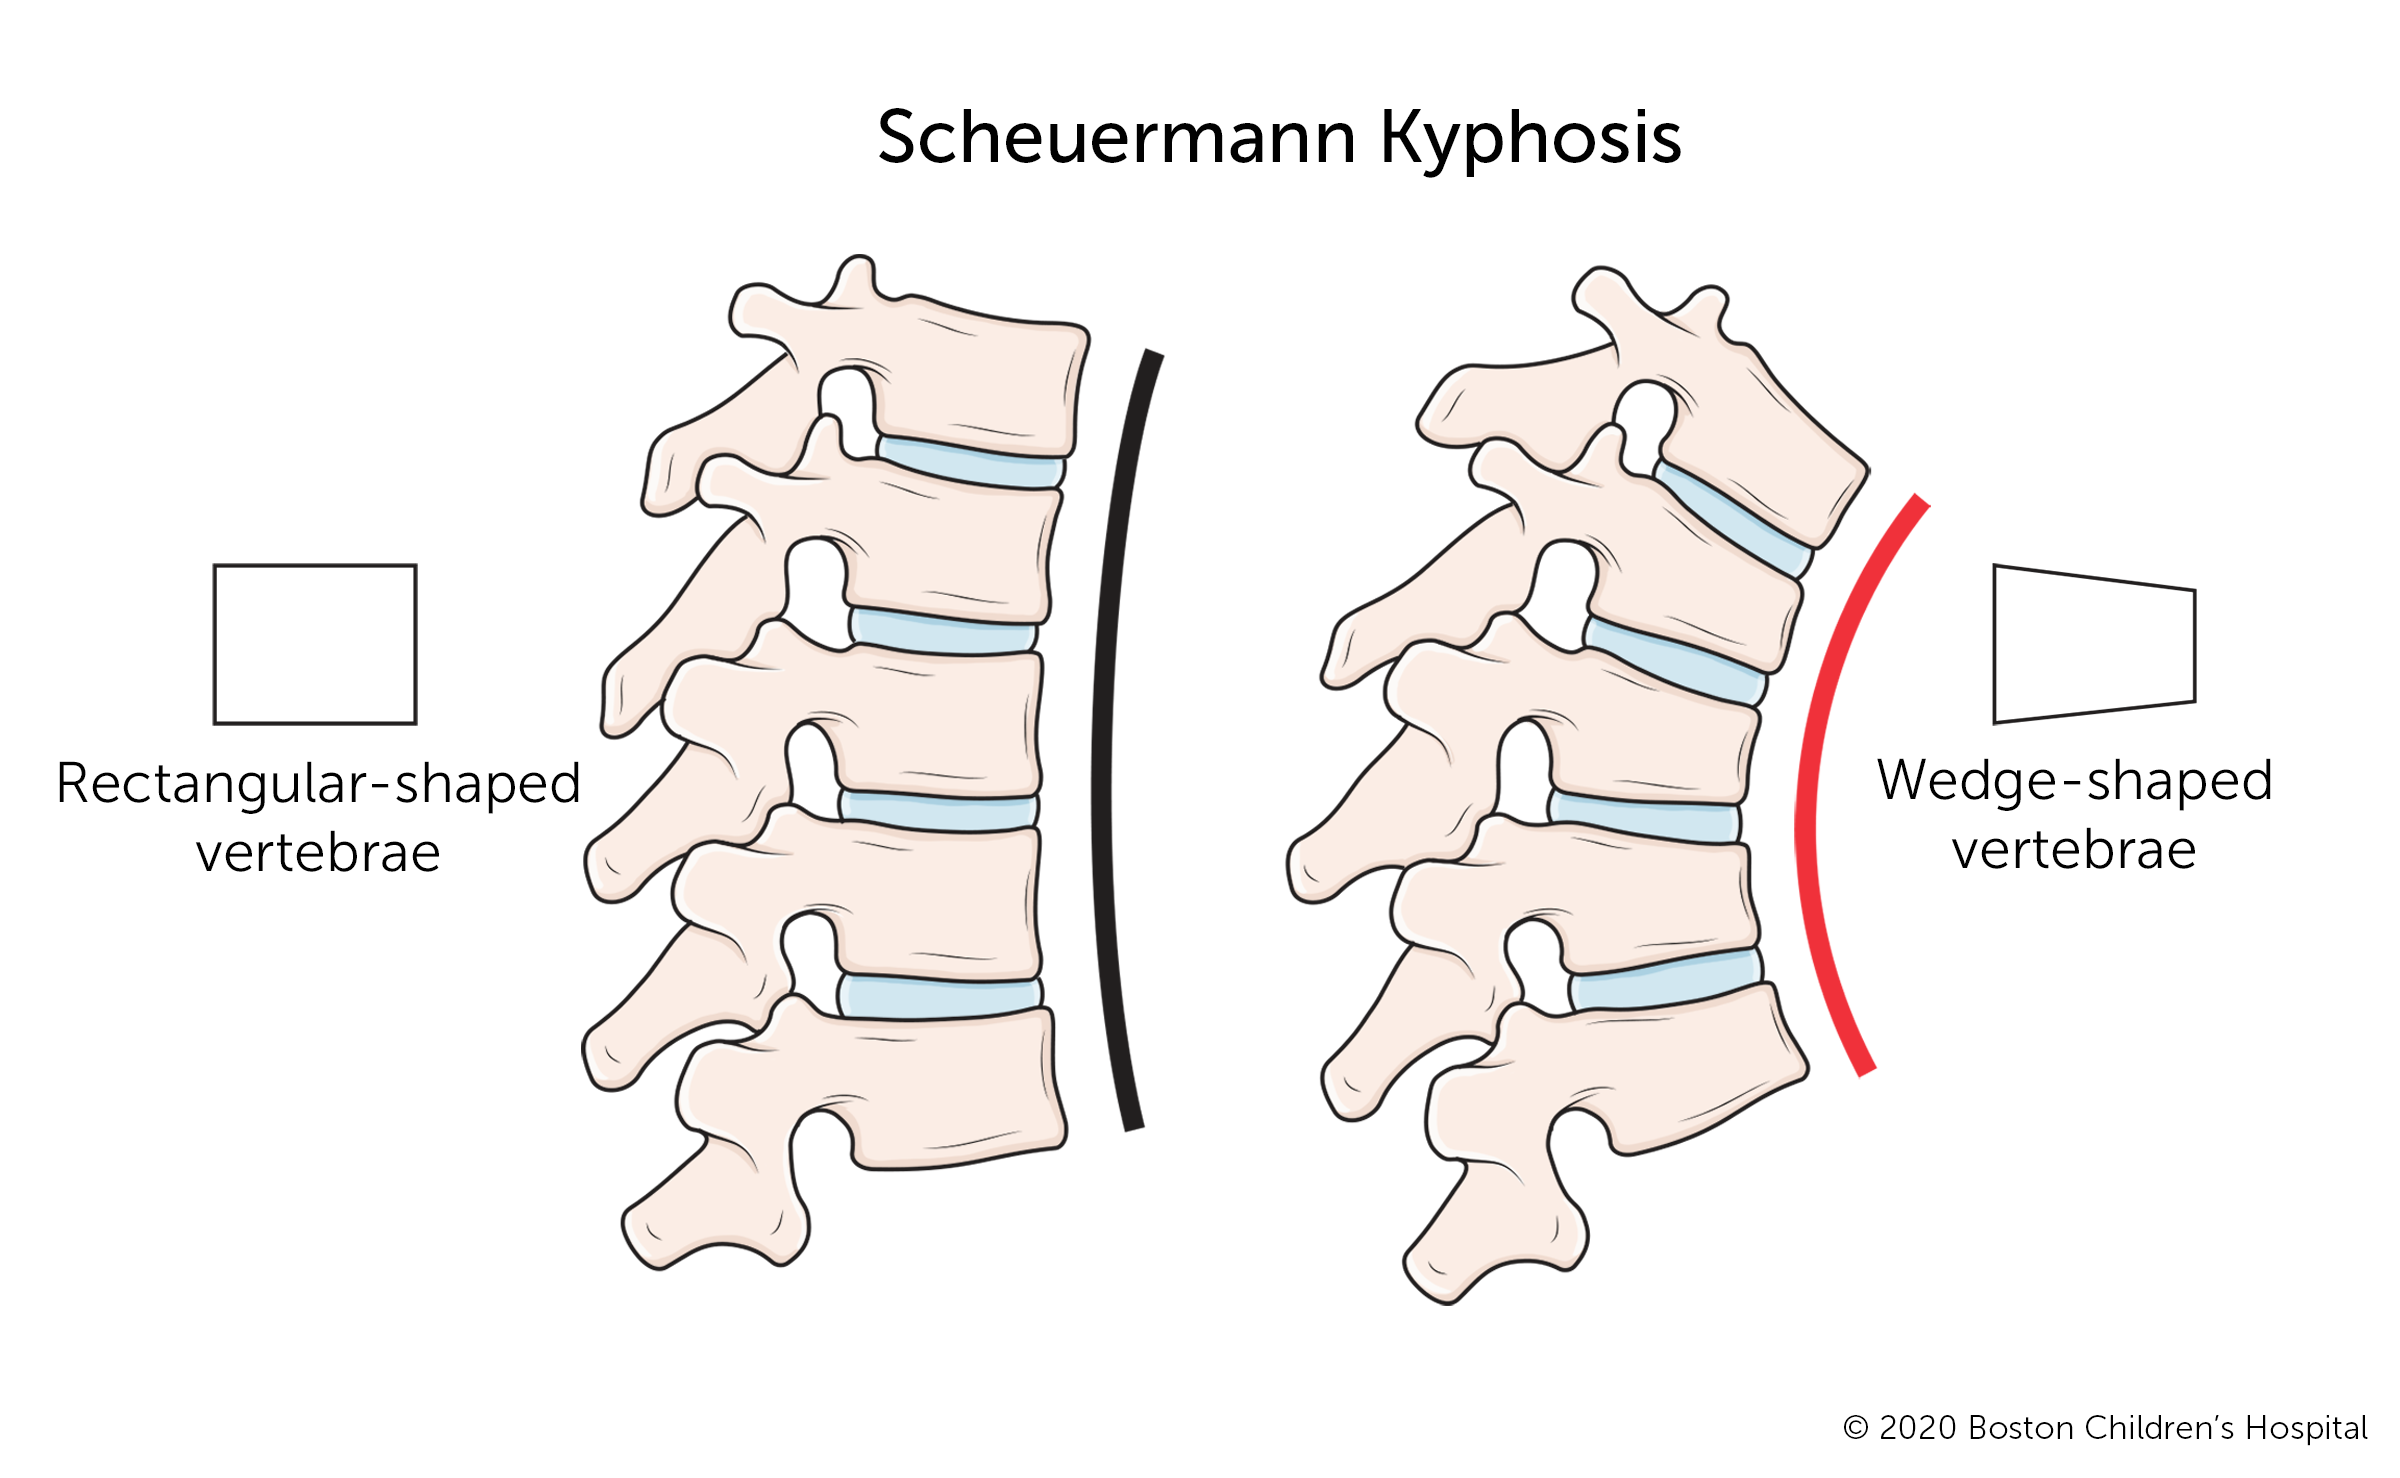 Scheuermann氏症，或称幼年后凸症，是一种结构异常，当胸椎的几个椎体发展成三角形(而不是矩形)形状时发生。